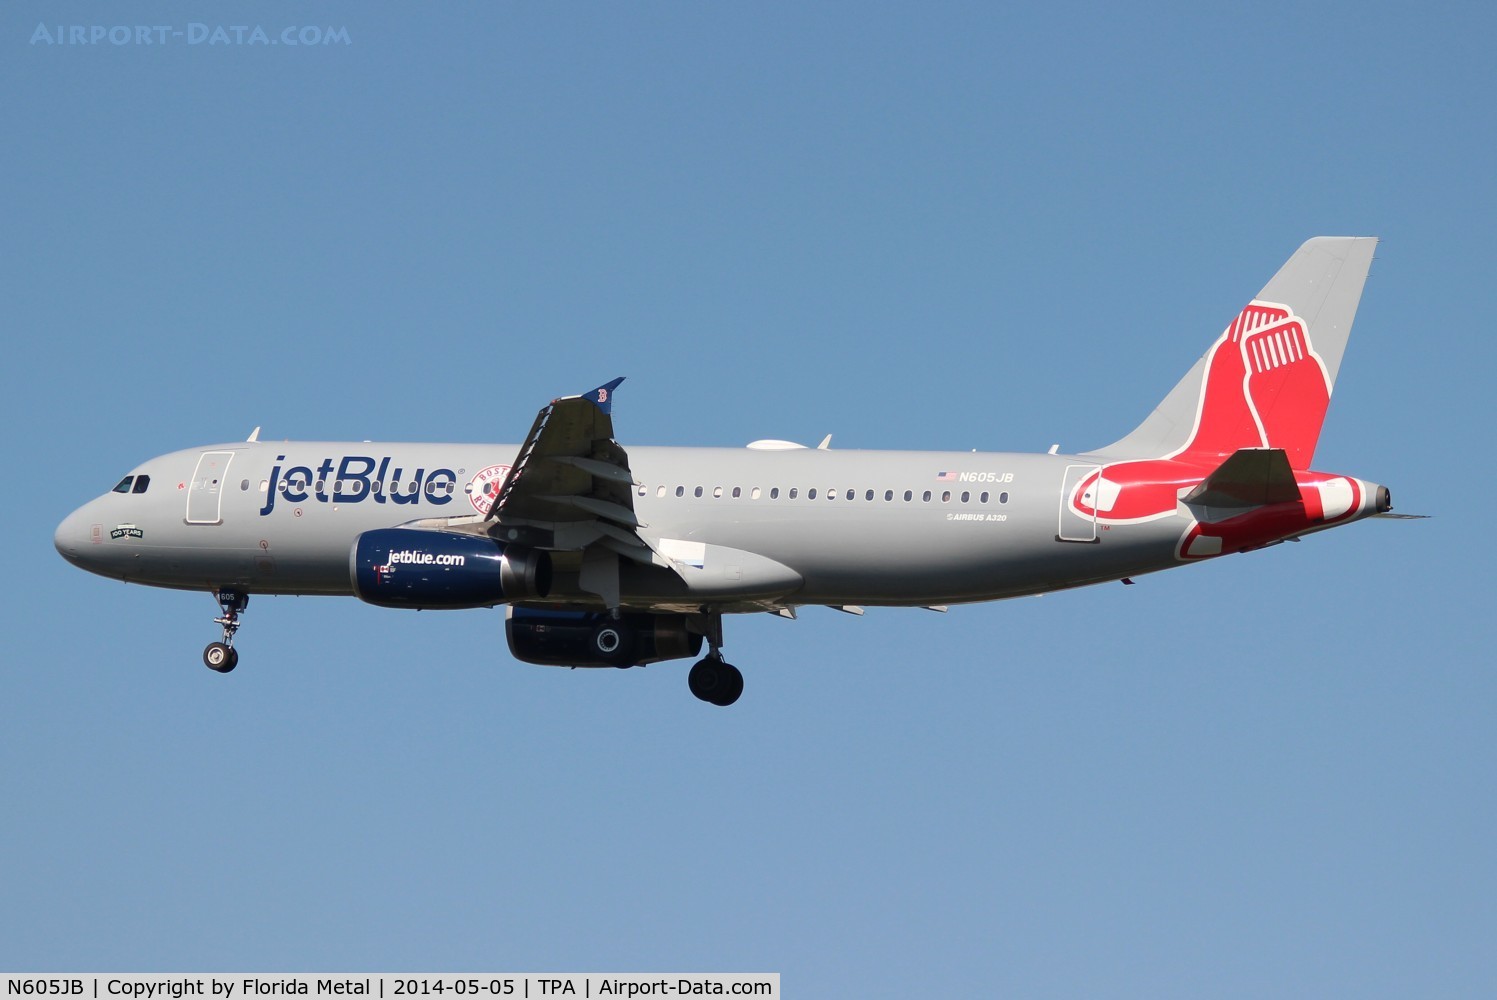 N605JB, 2005 Airbus A320-232 C/N 2368, Jet Blue Boston Red Socks